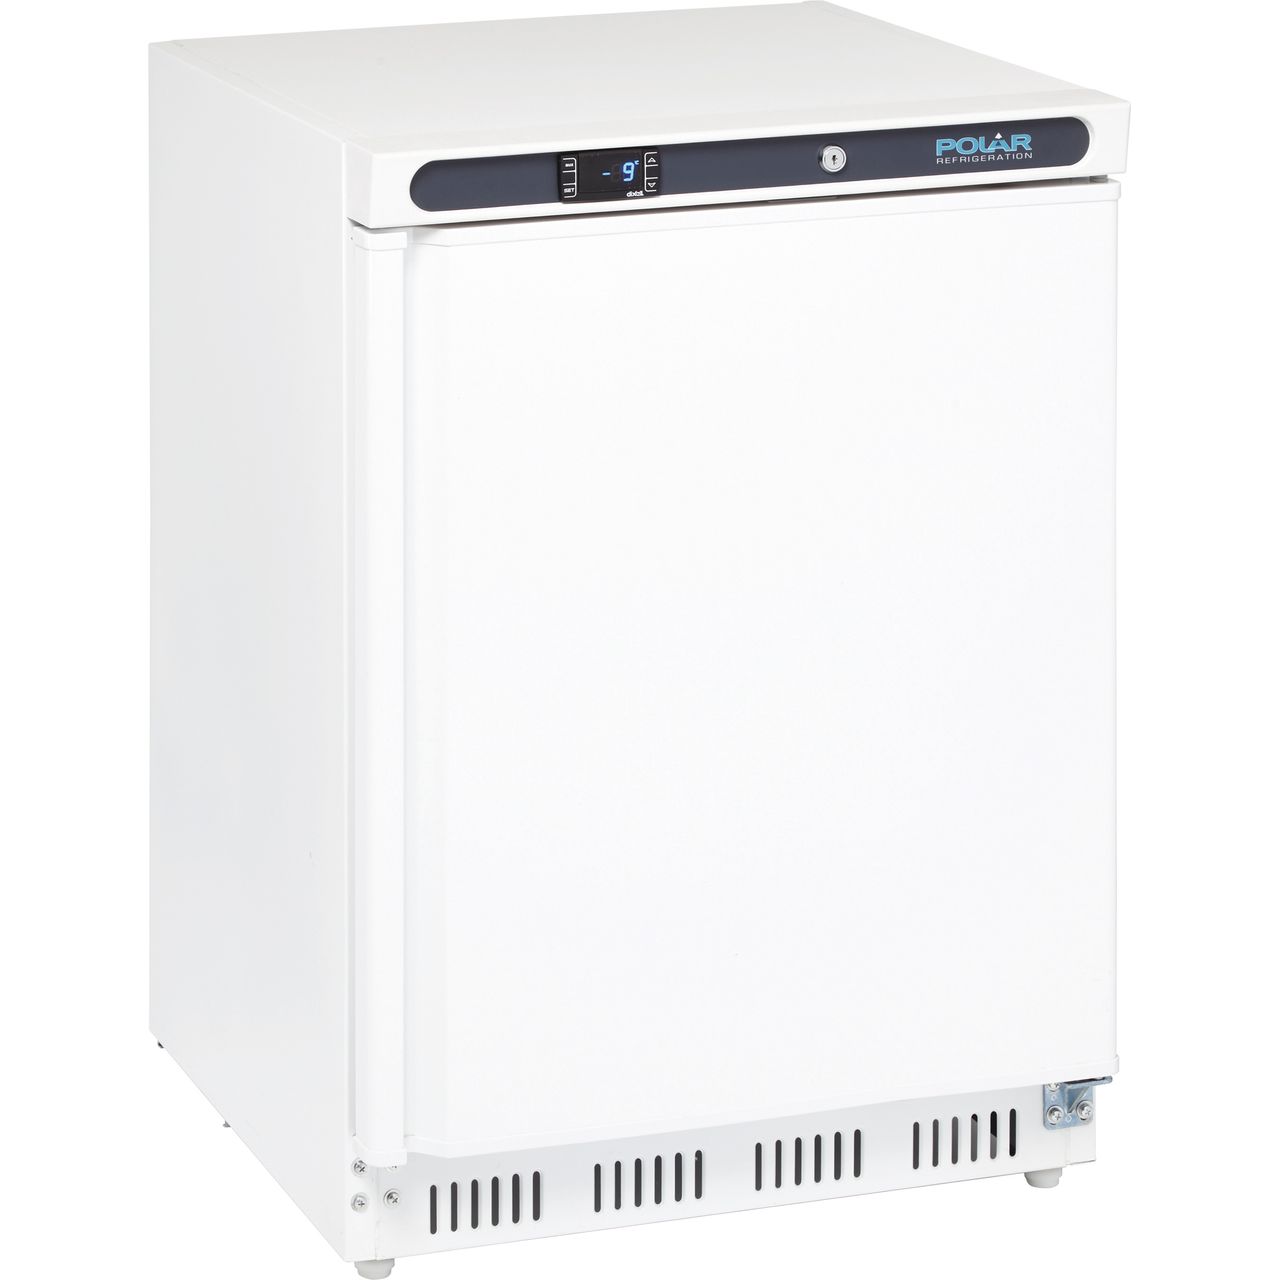 Polar CD611 Under Counter Freezer Review